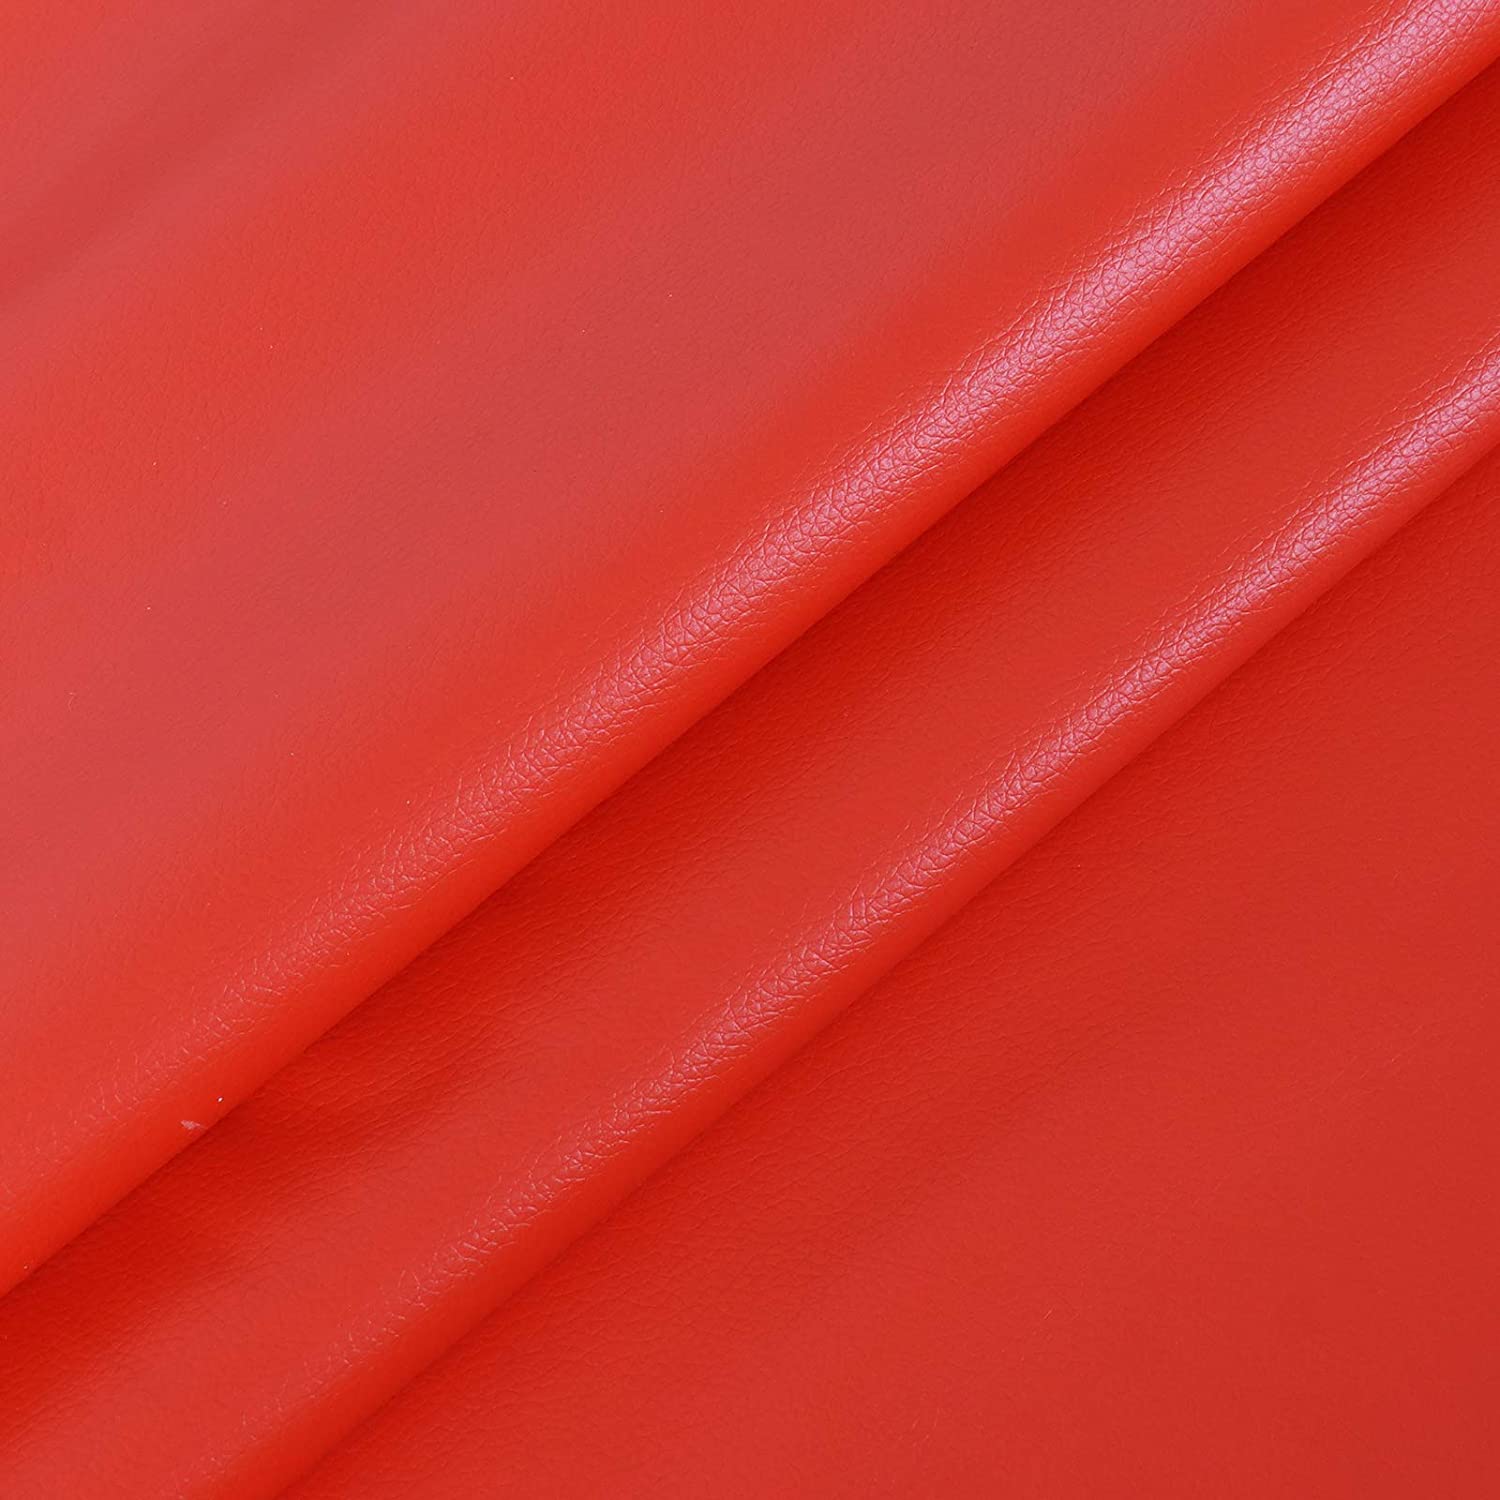 PVC Leather MAR- UV, salt water resistant, Red. Width 145cm, weight 600g/m². Price per meter VAT incl.